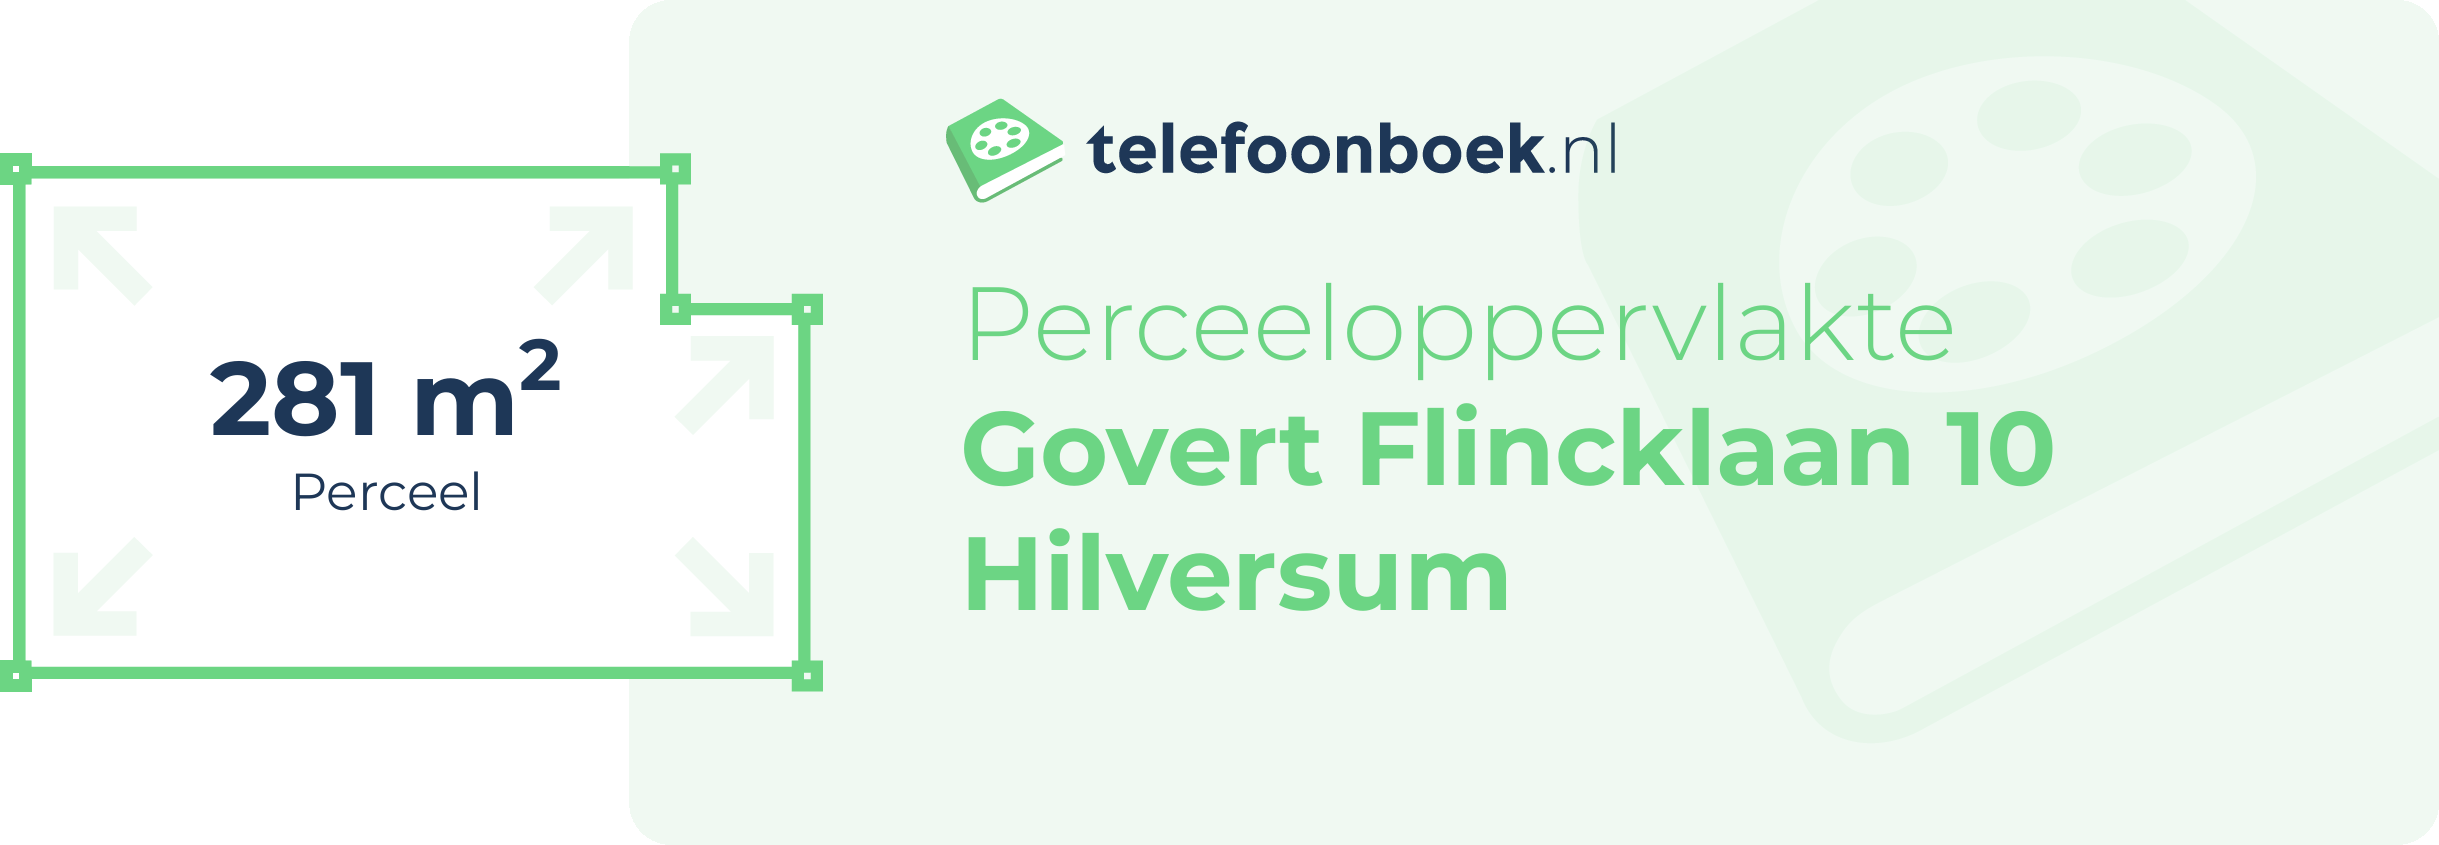 Perceeloppervlakte Govert Flincklaan 10 Hilversum